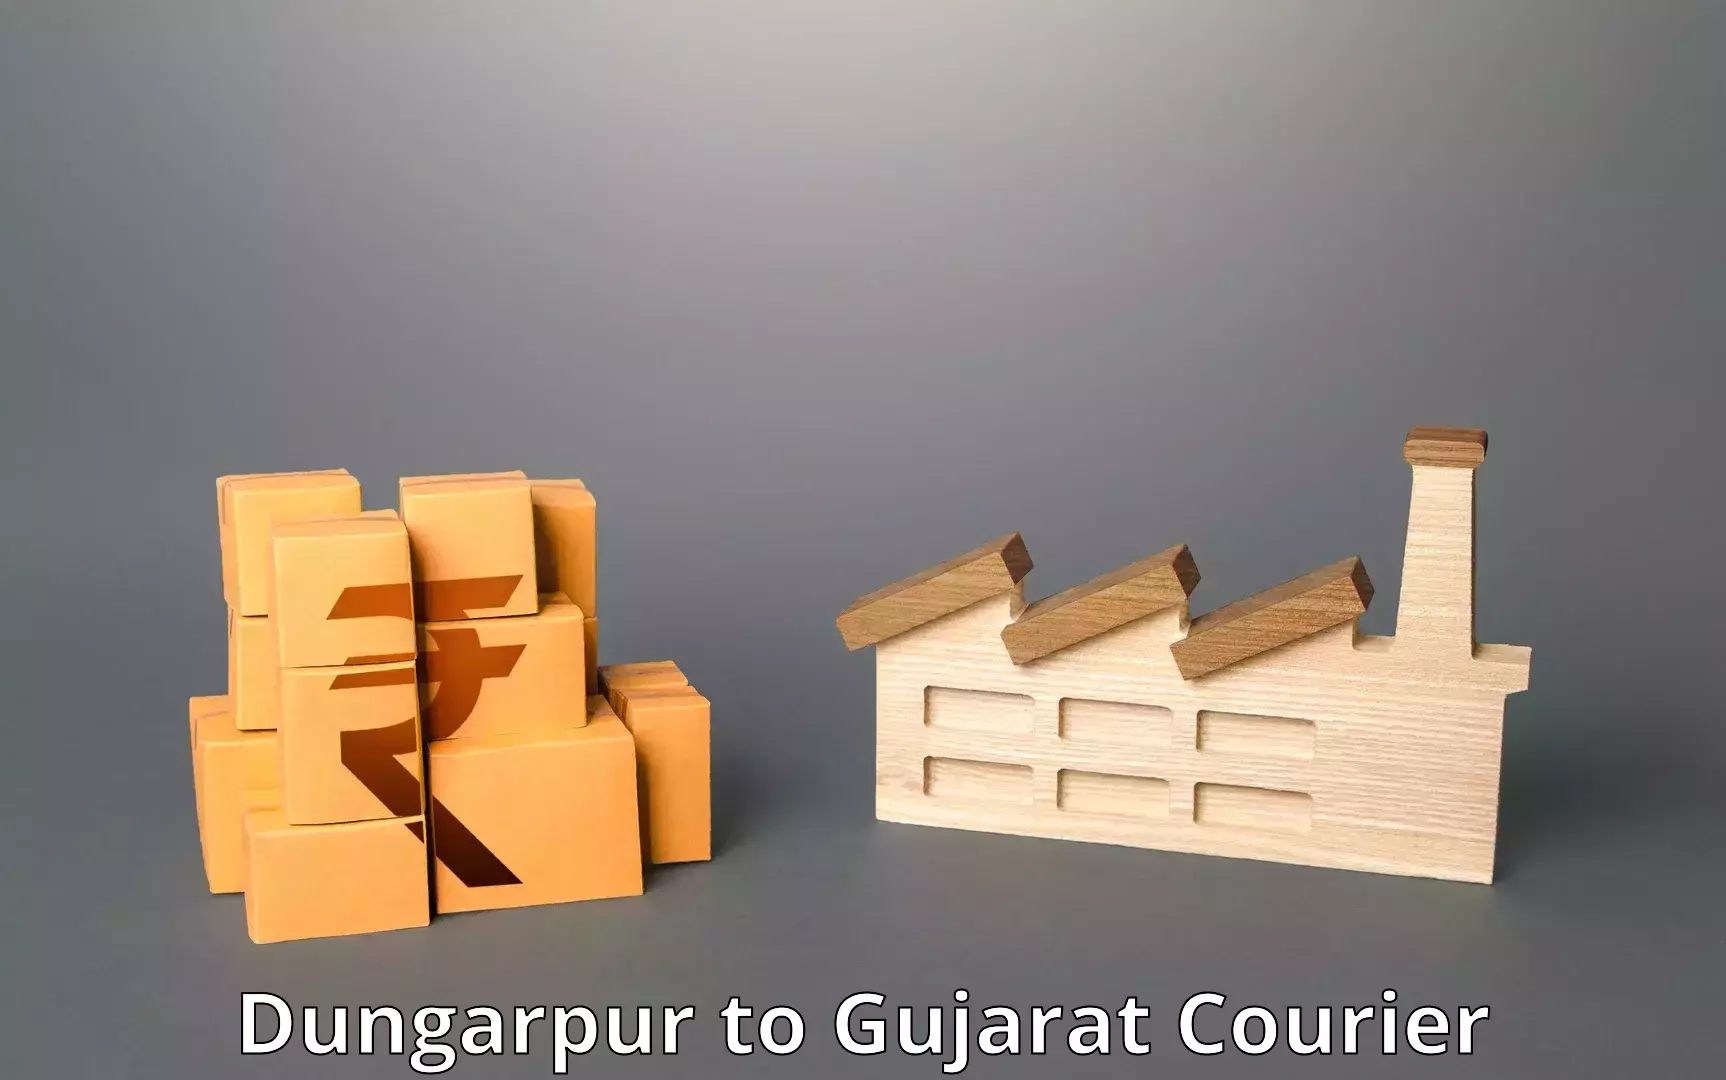 Courier service comparison Dungarpur to Kachchh